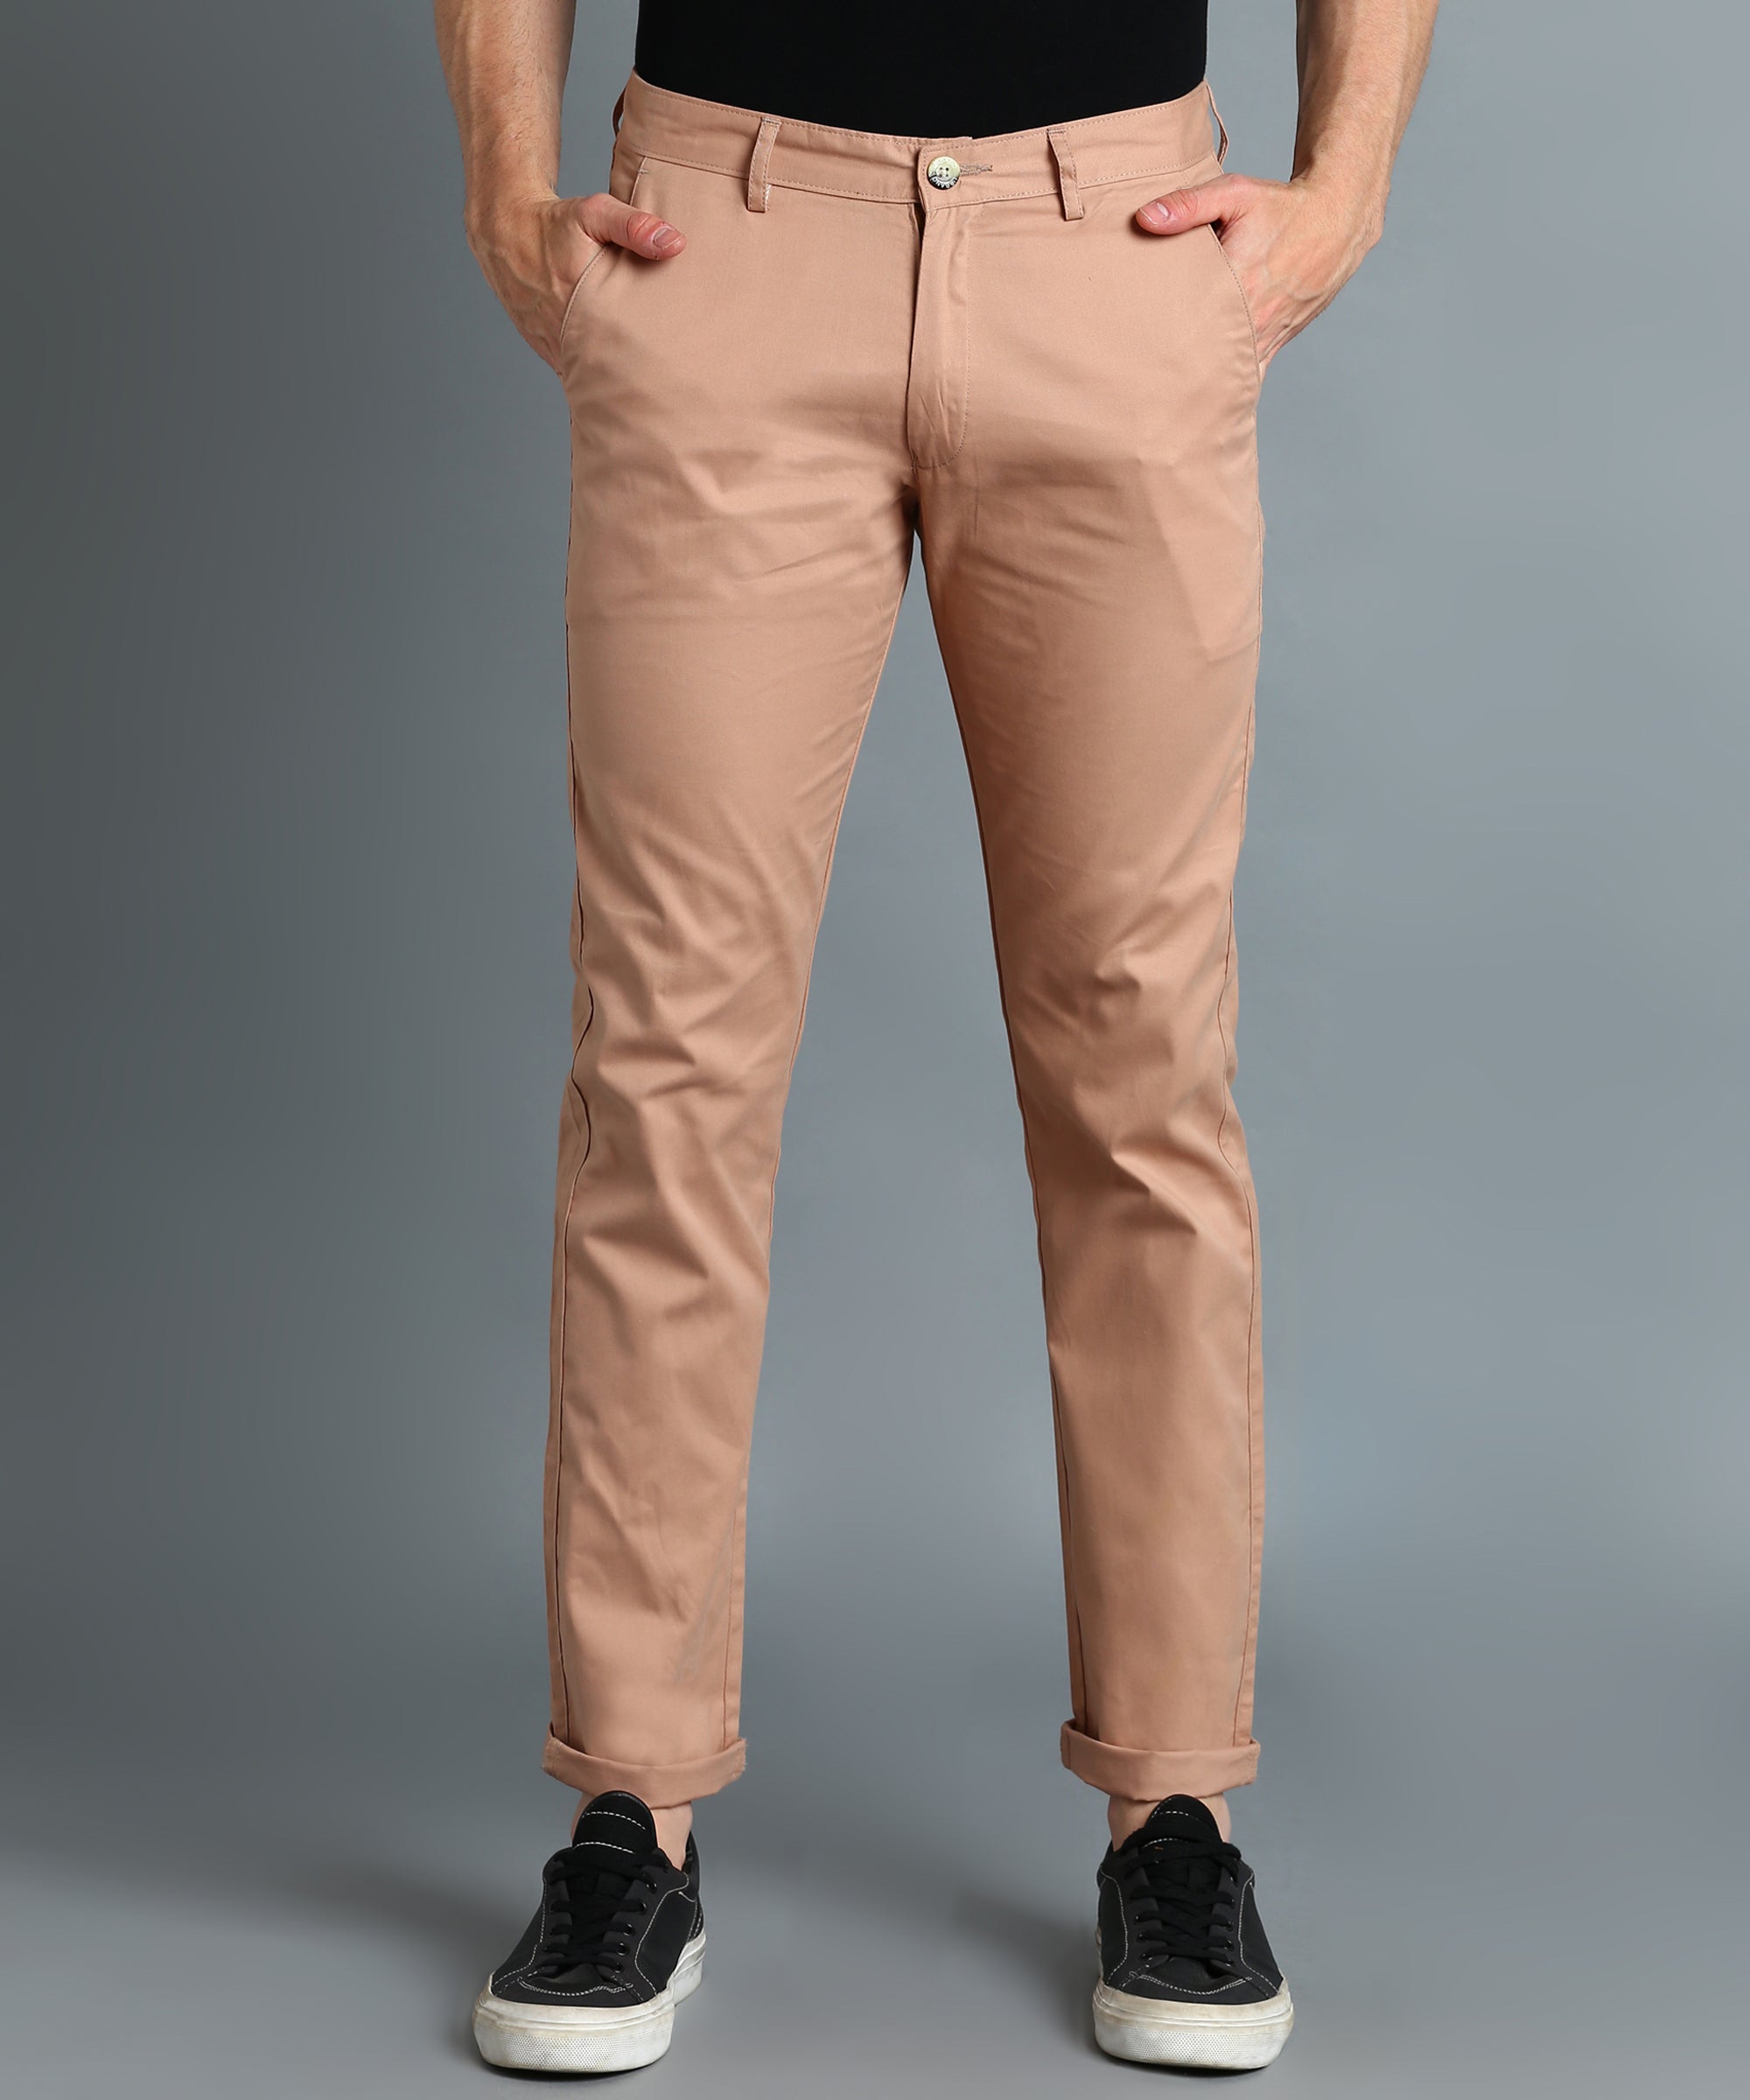 Urbano Fashion Men's Purple Cotton Light Weight Non-Stretch Slim Fit Casual Trousers